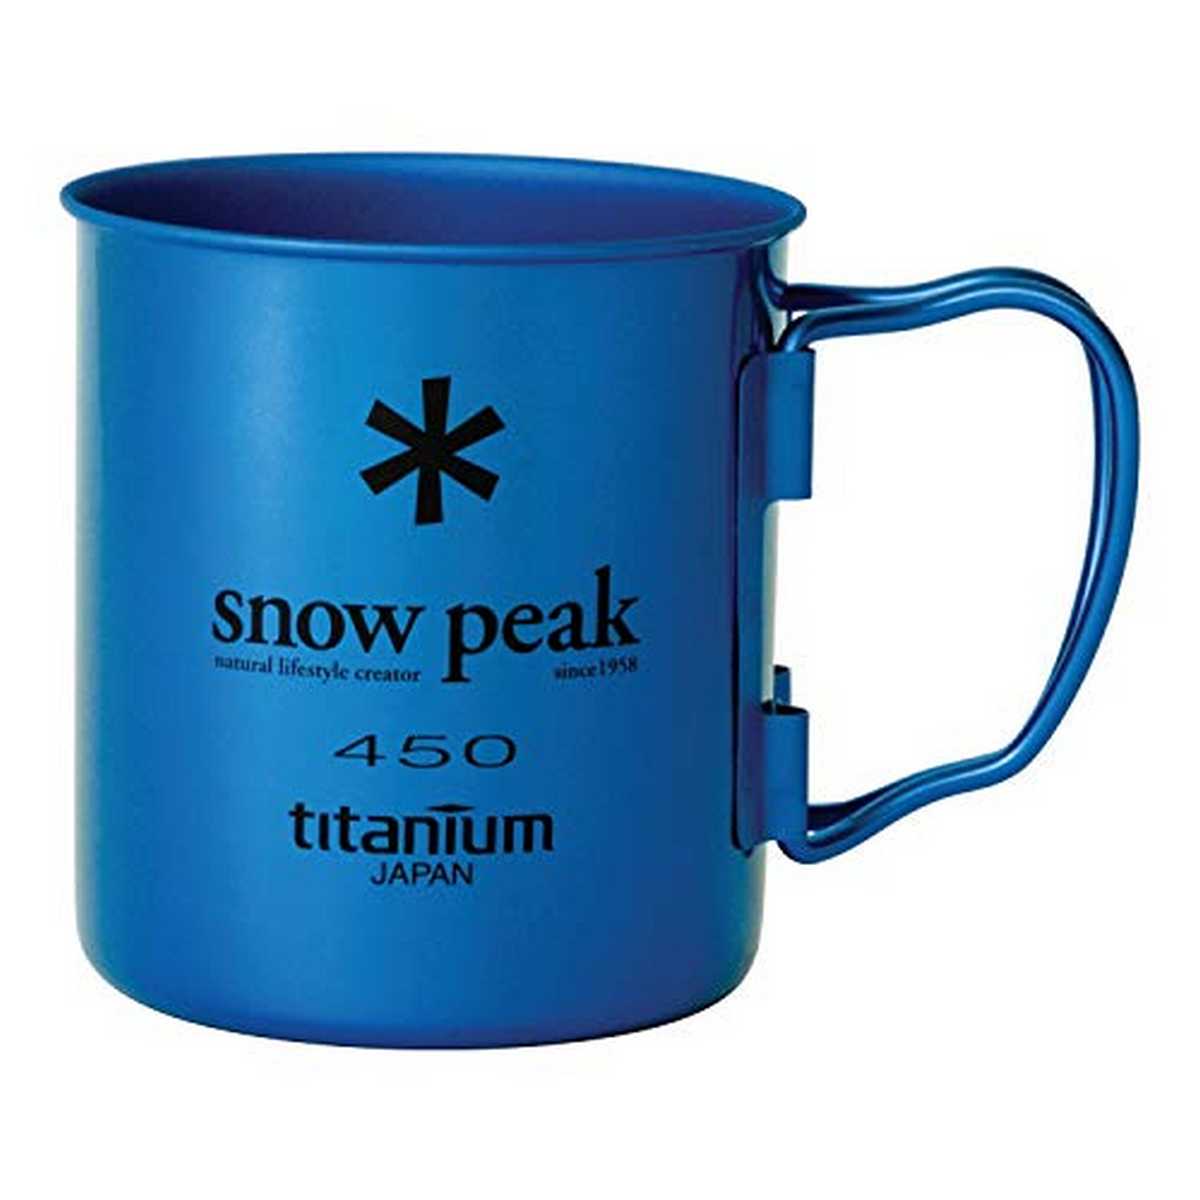 Snow Peak Ti-Single 450 Anodized Cup